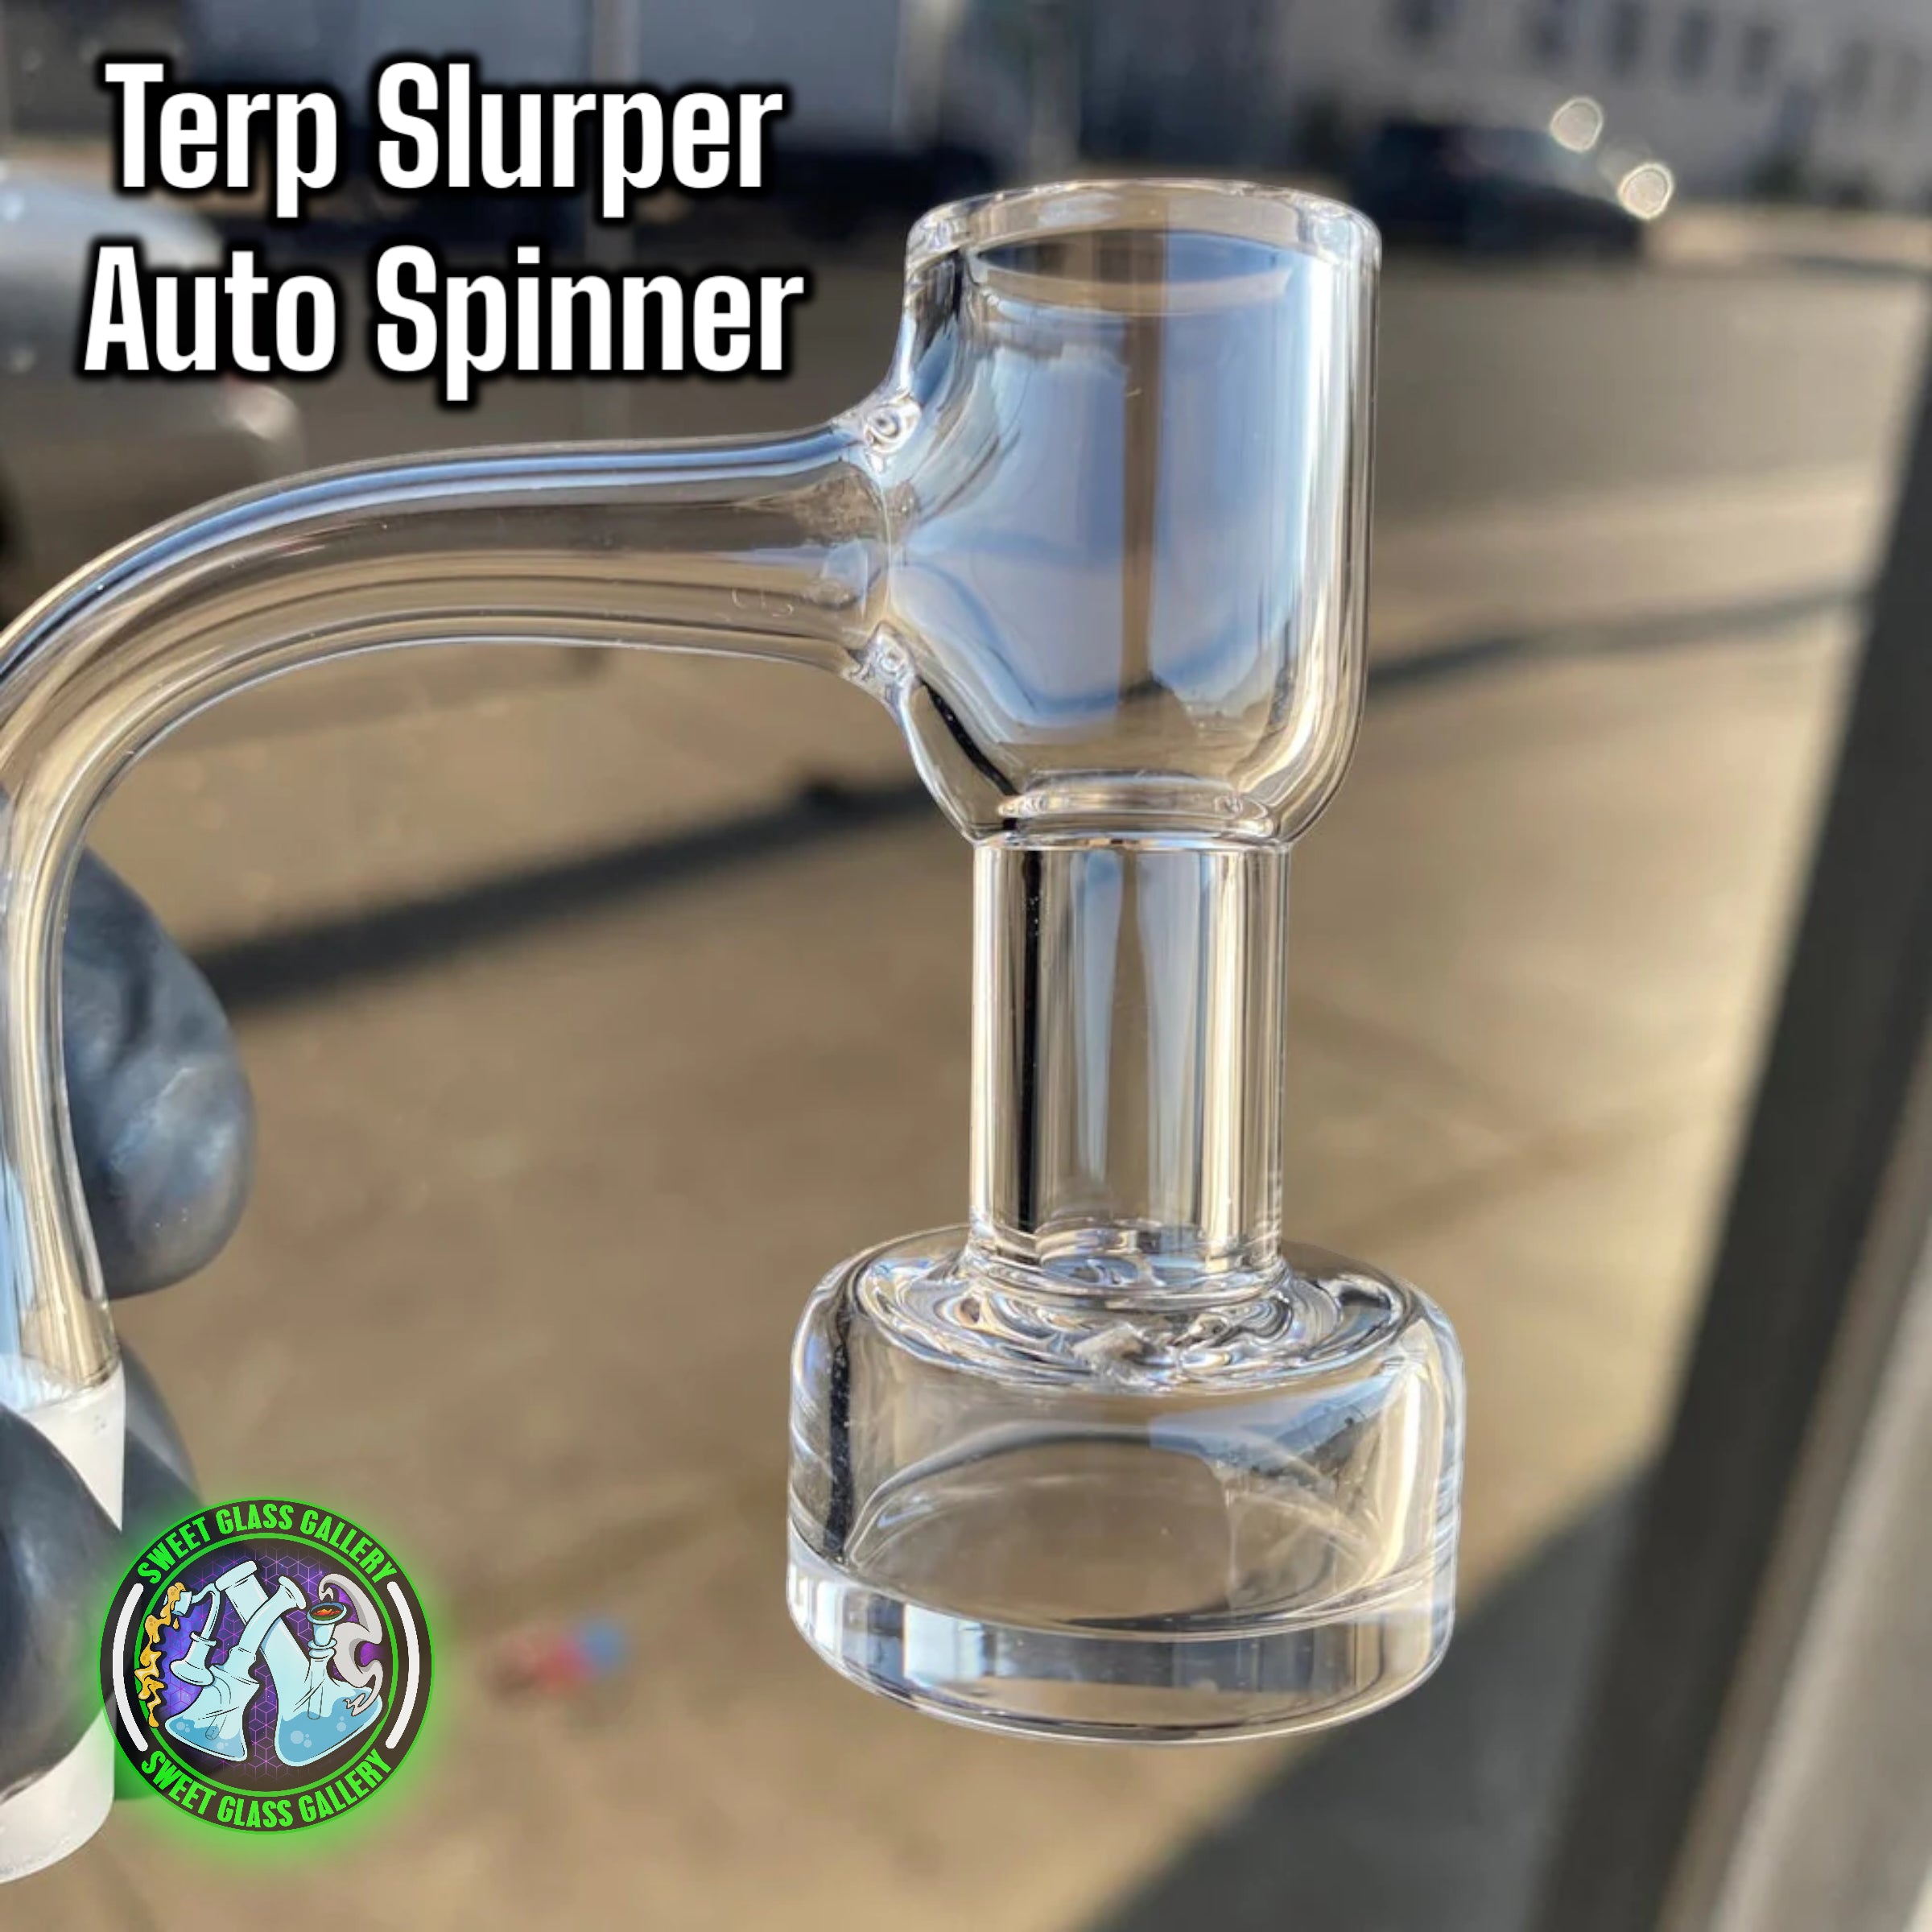 Geewest - Terp Slurper Auto Spinner